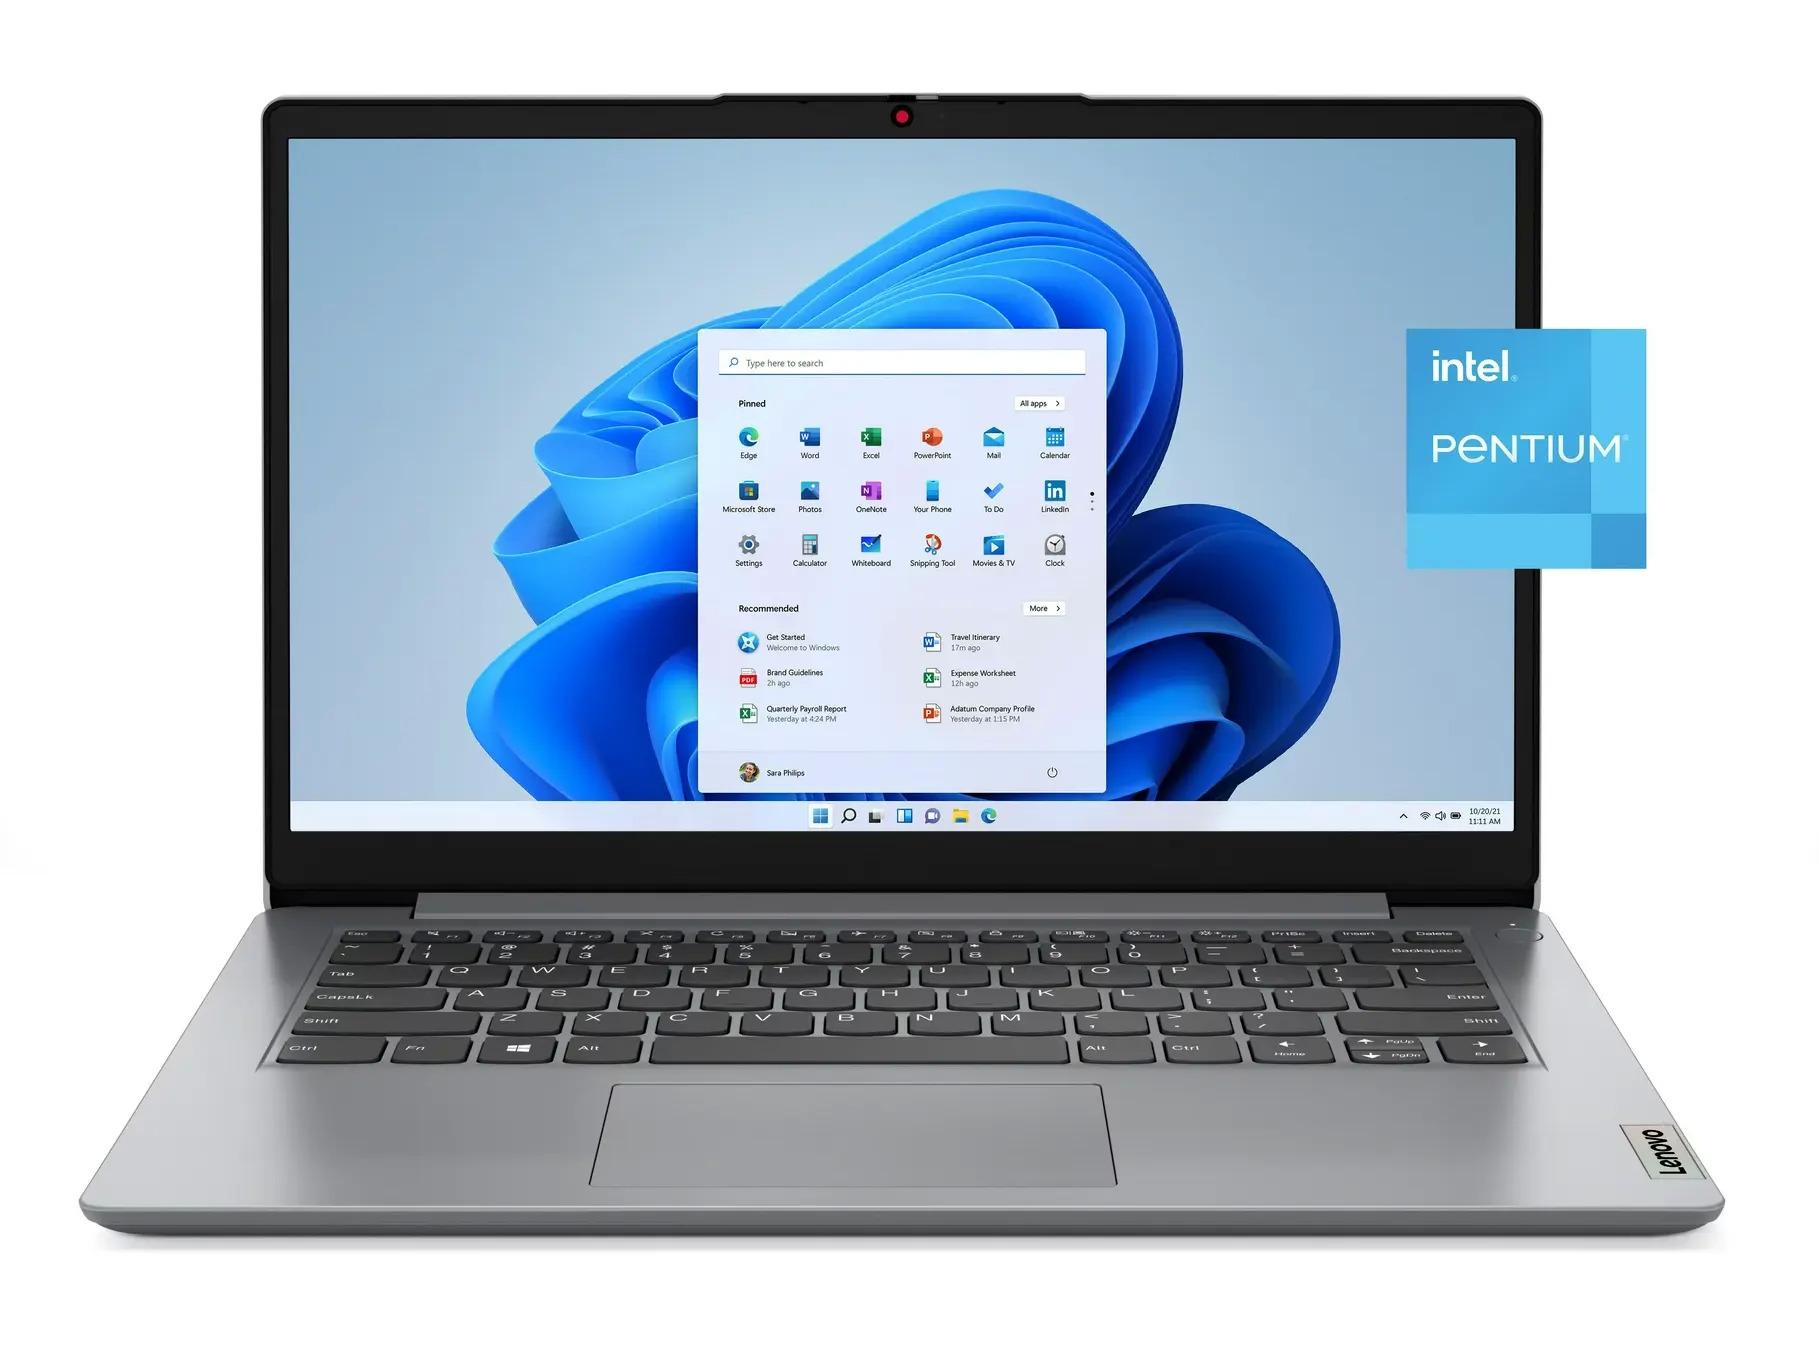 Lenovo Ideapad 1i Pentium 4GB 128GB Notebook Laptop for $129 Shipped